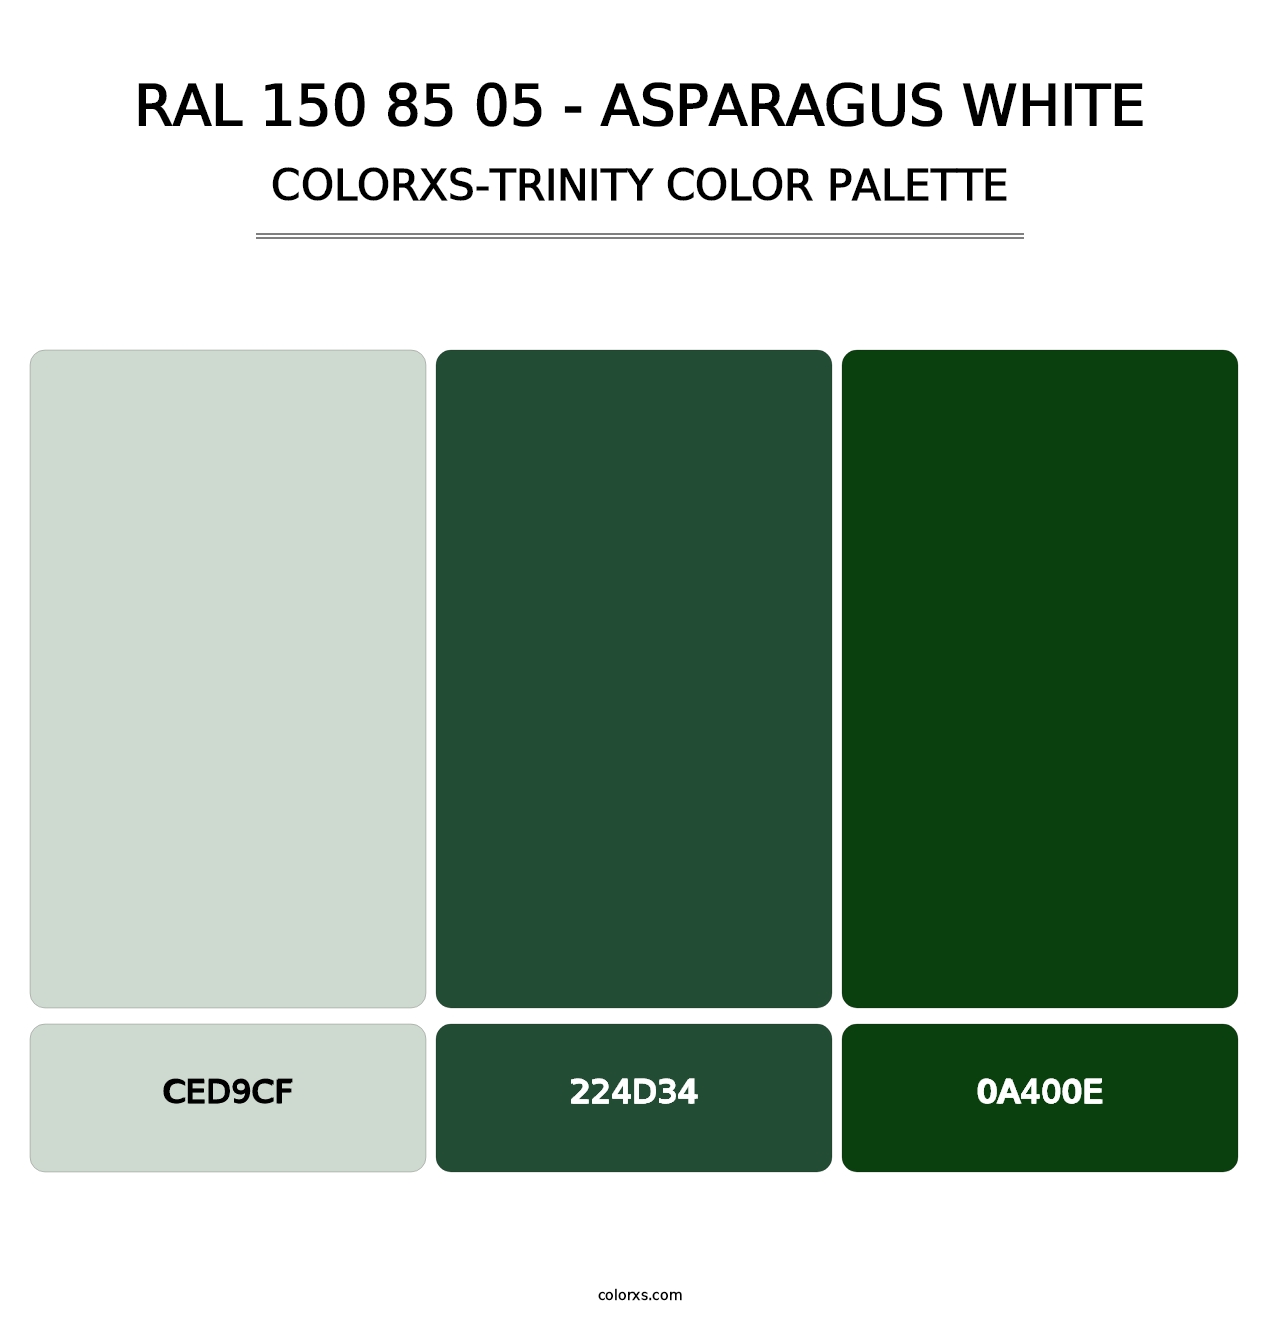 RAL 150 85 05 - Asparagus White - Colorxs Trinity Palette